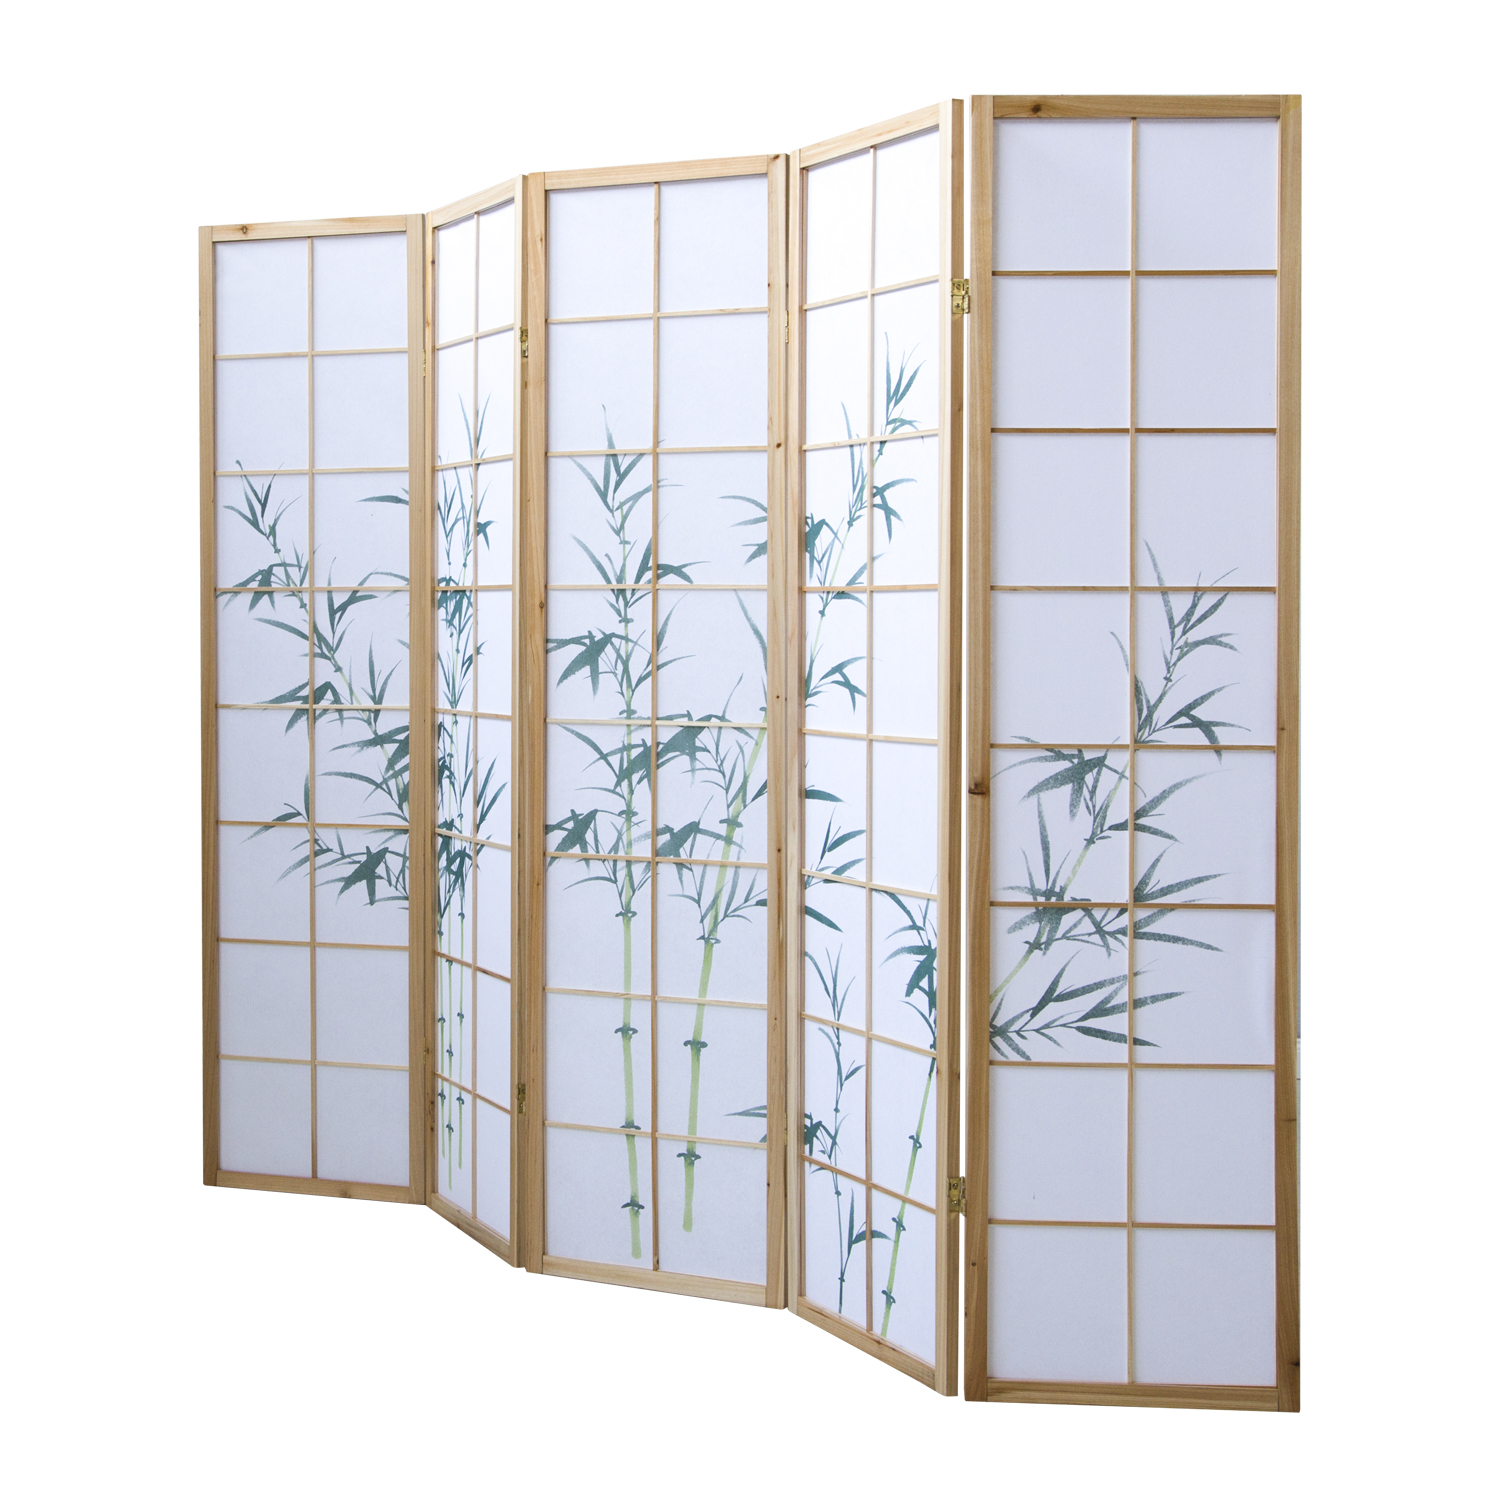 Paravent Raumteiler 5 teilig, Holz Natur, Reispapier Weiß, Bambusmuster, Höhe 175 cm					